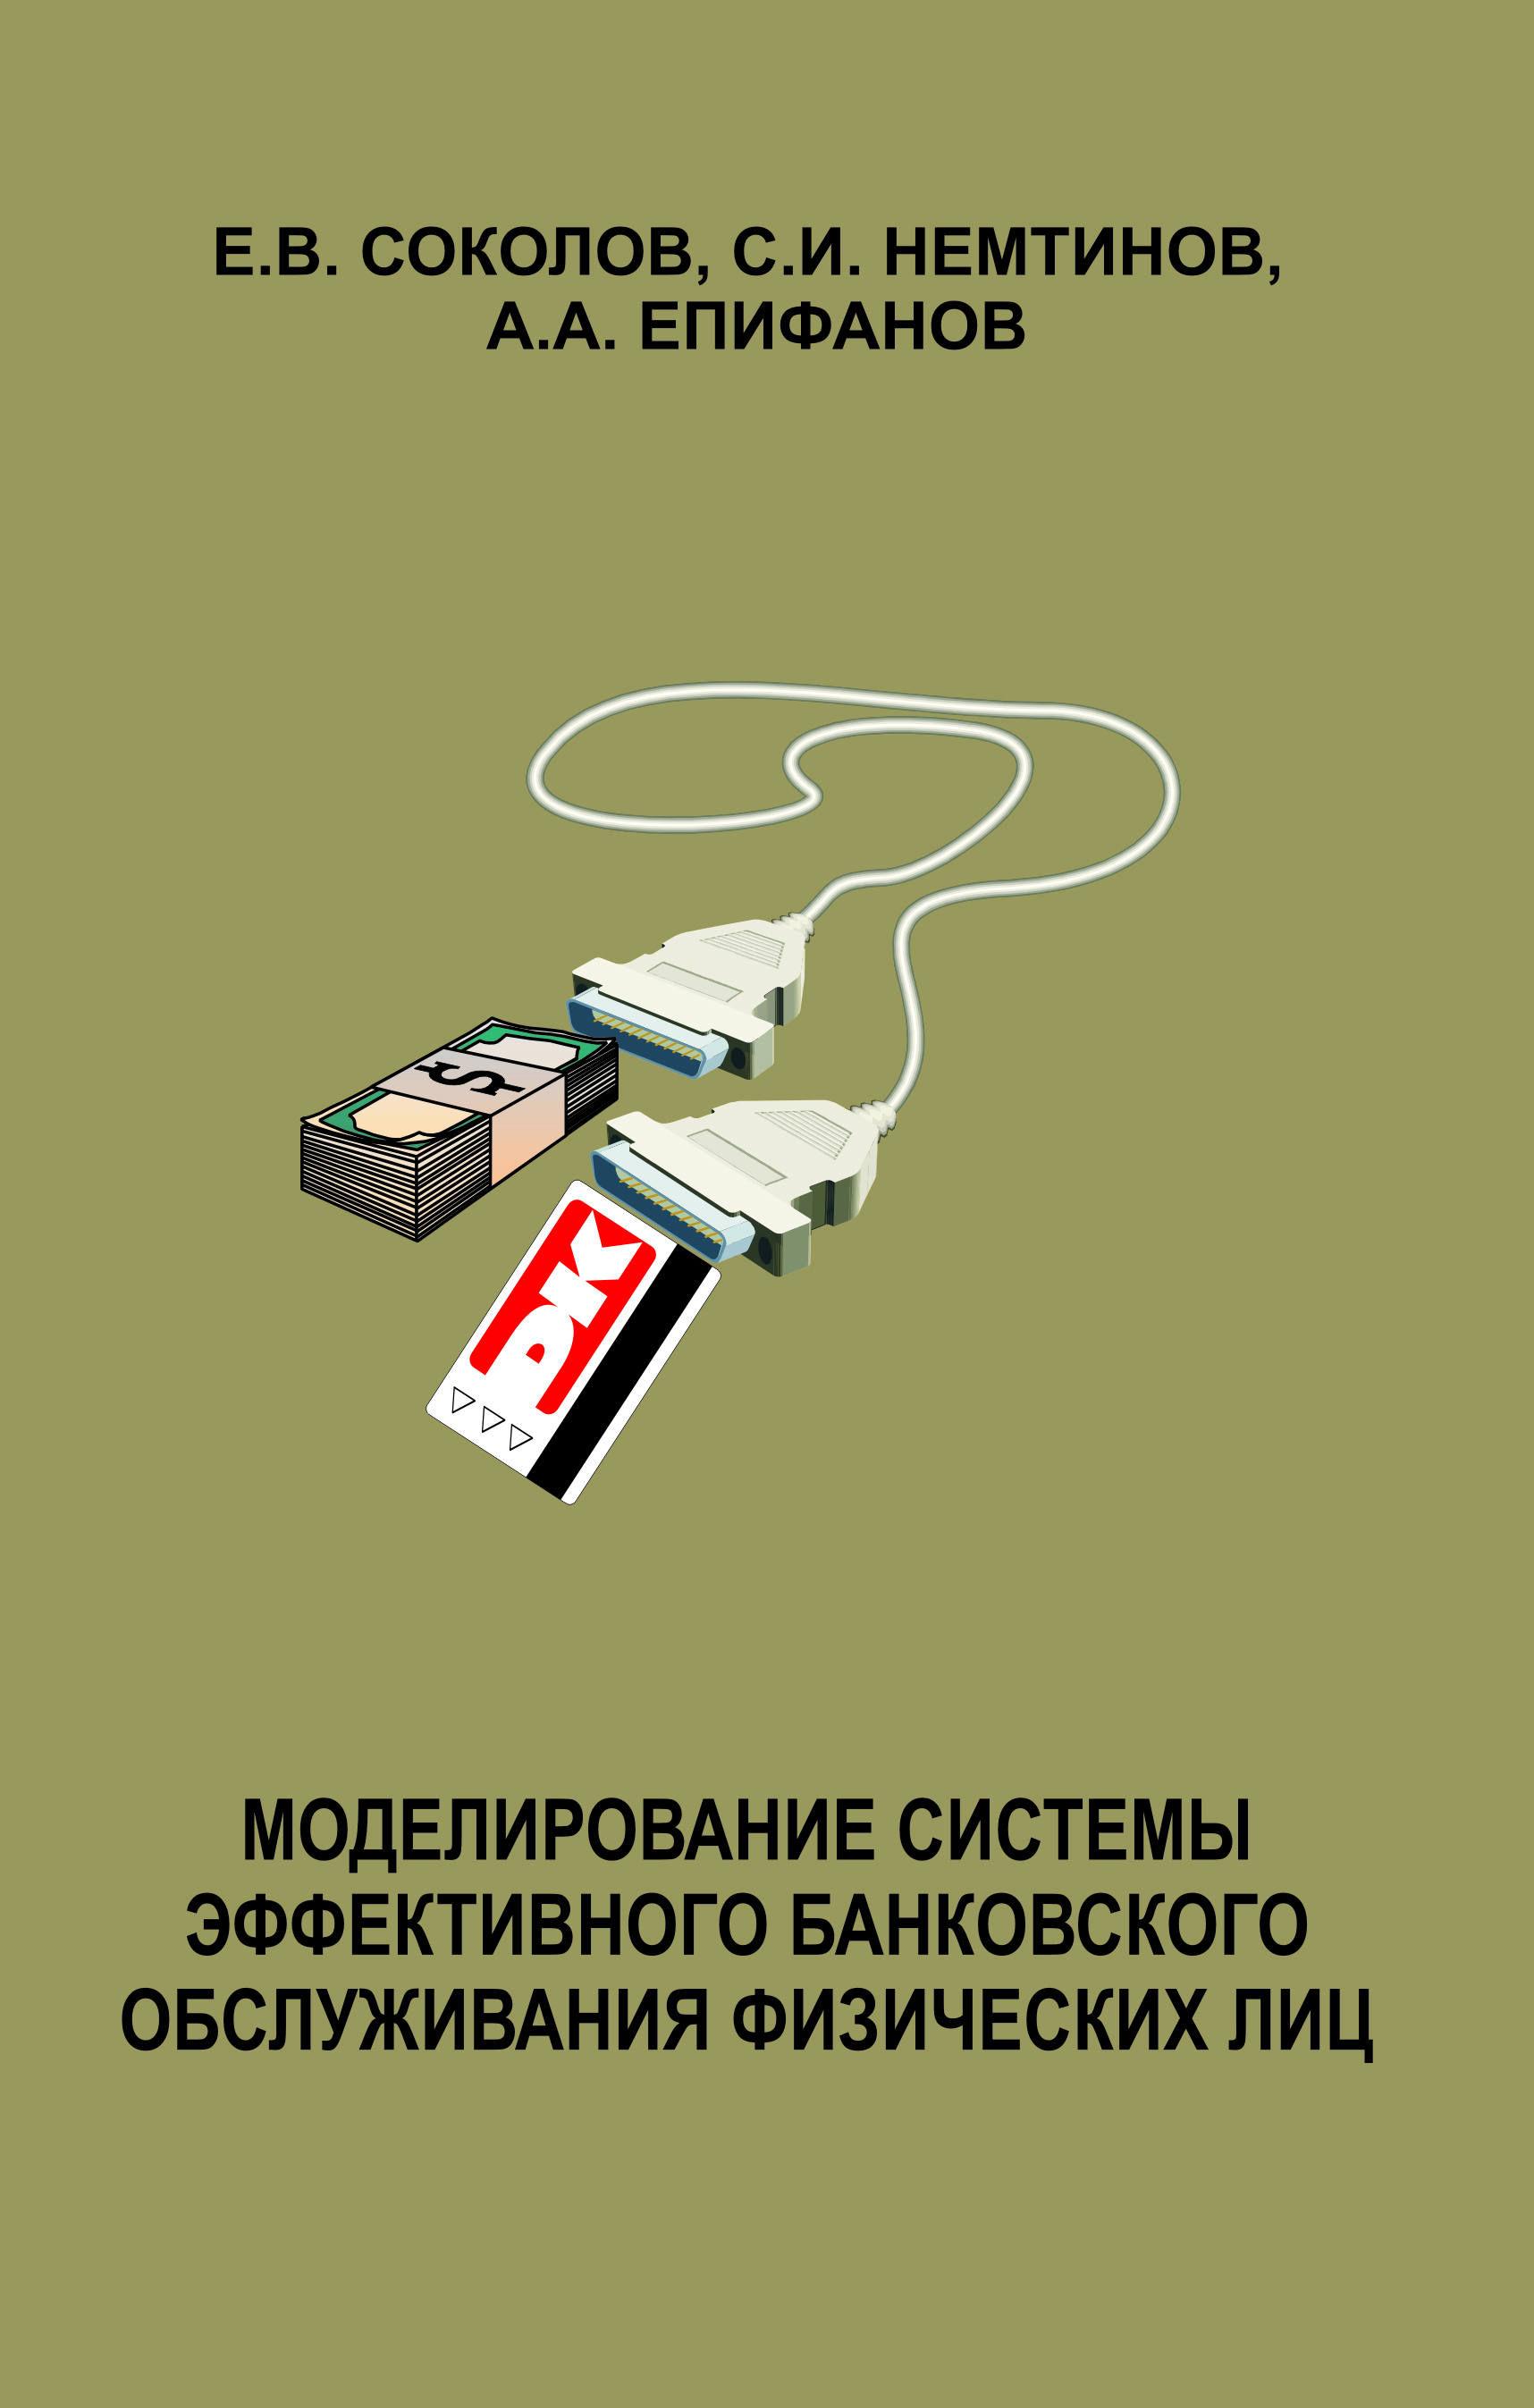 <div class=vernacular lang="ru">Модели и эффективность банковского обслуживания с использованием пластиковых карт /</div>
Modeli i ėffektivnostʹ bankovskogo obsluzhivanii︠a︡ s ispolʹzovaniem plastikovykh kart